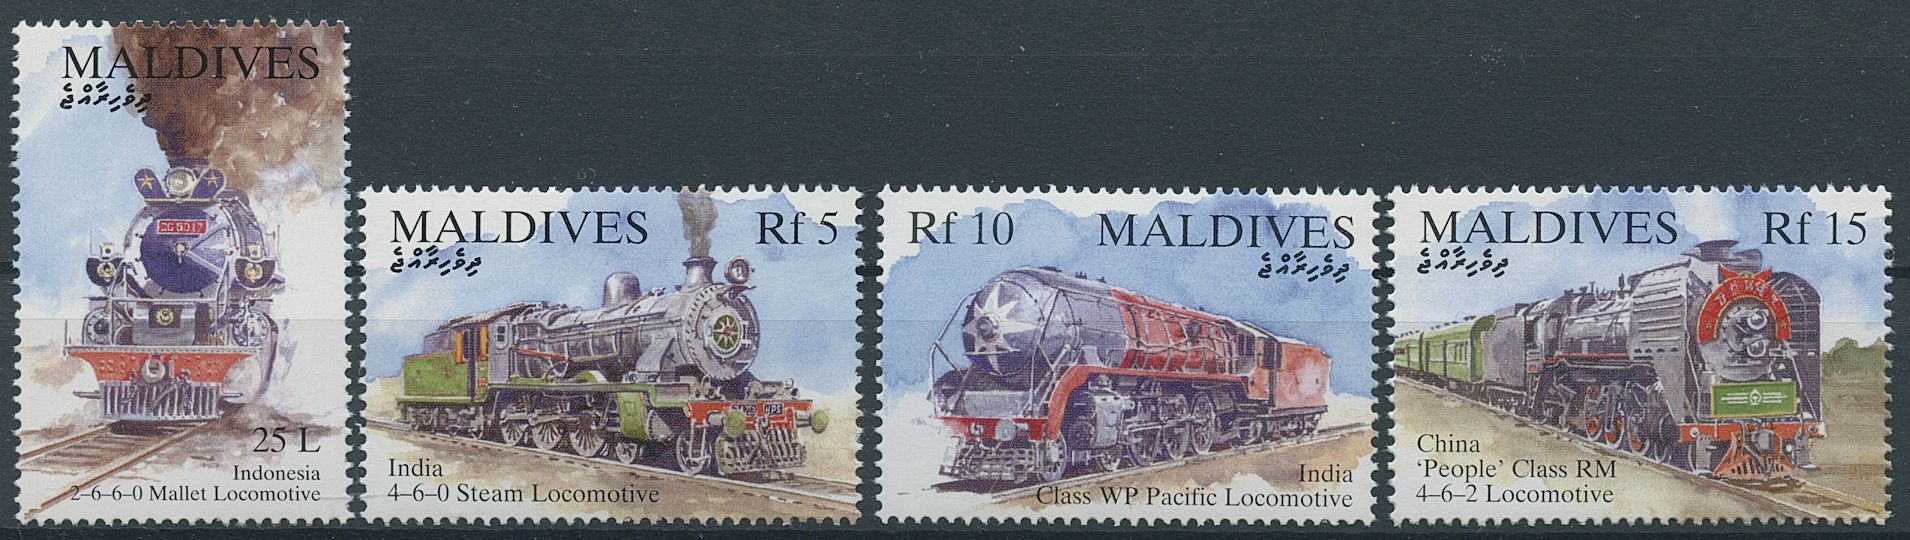 Maldives 1994 MNH Trains Stamps Railways Locomotives Rail 4v Set III